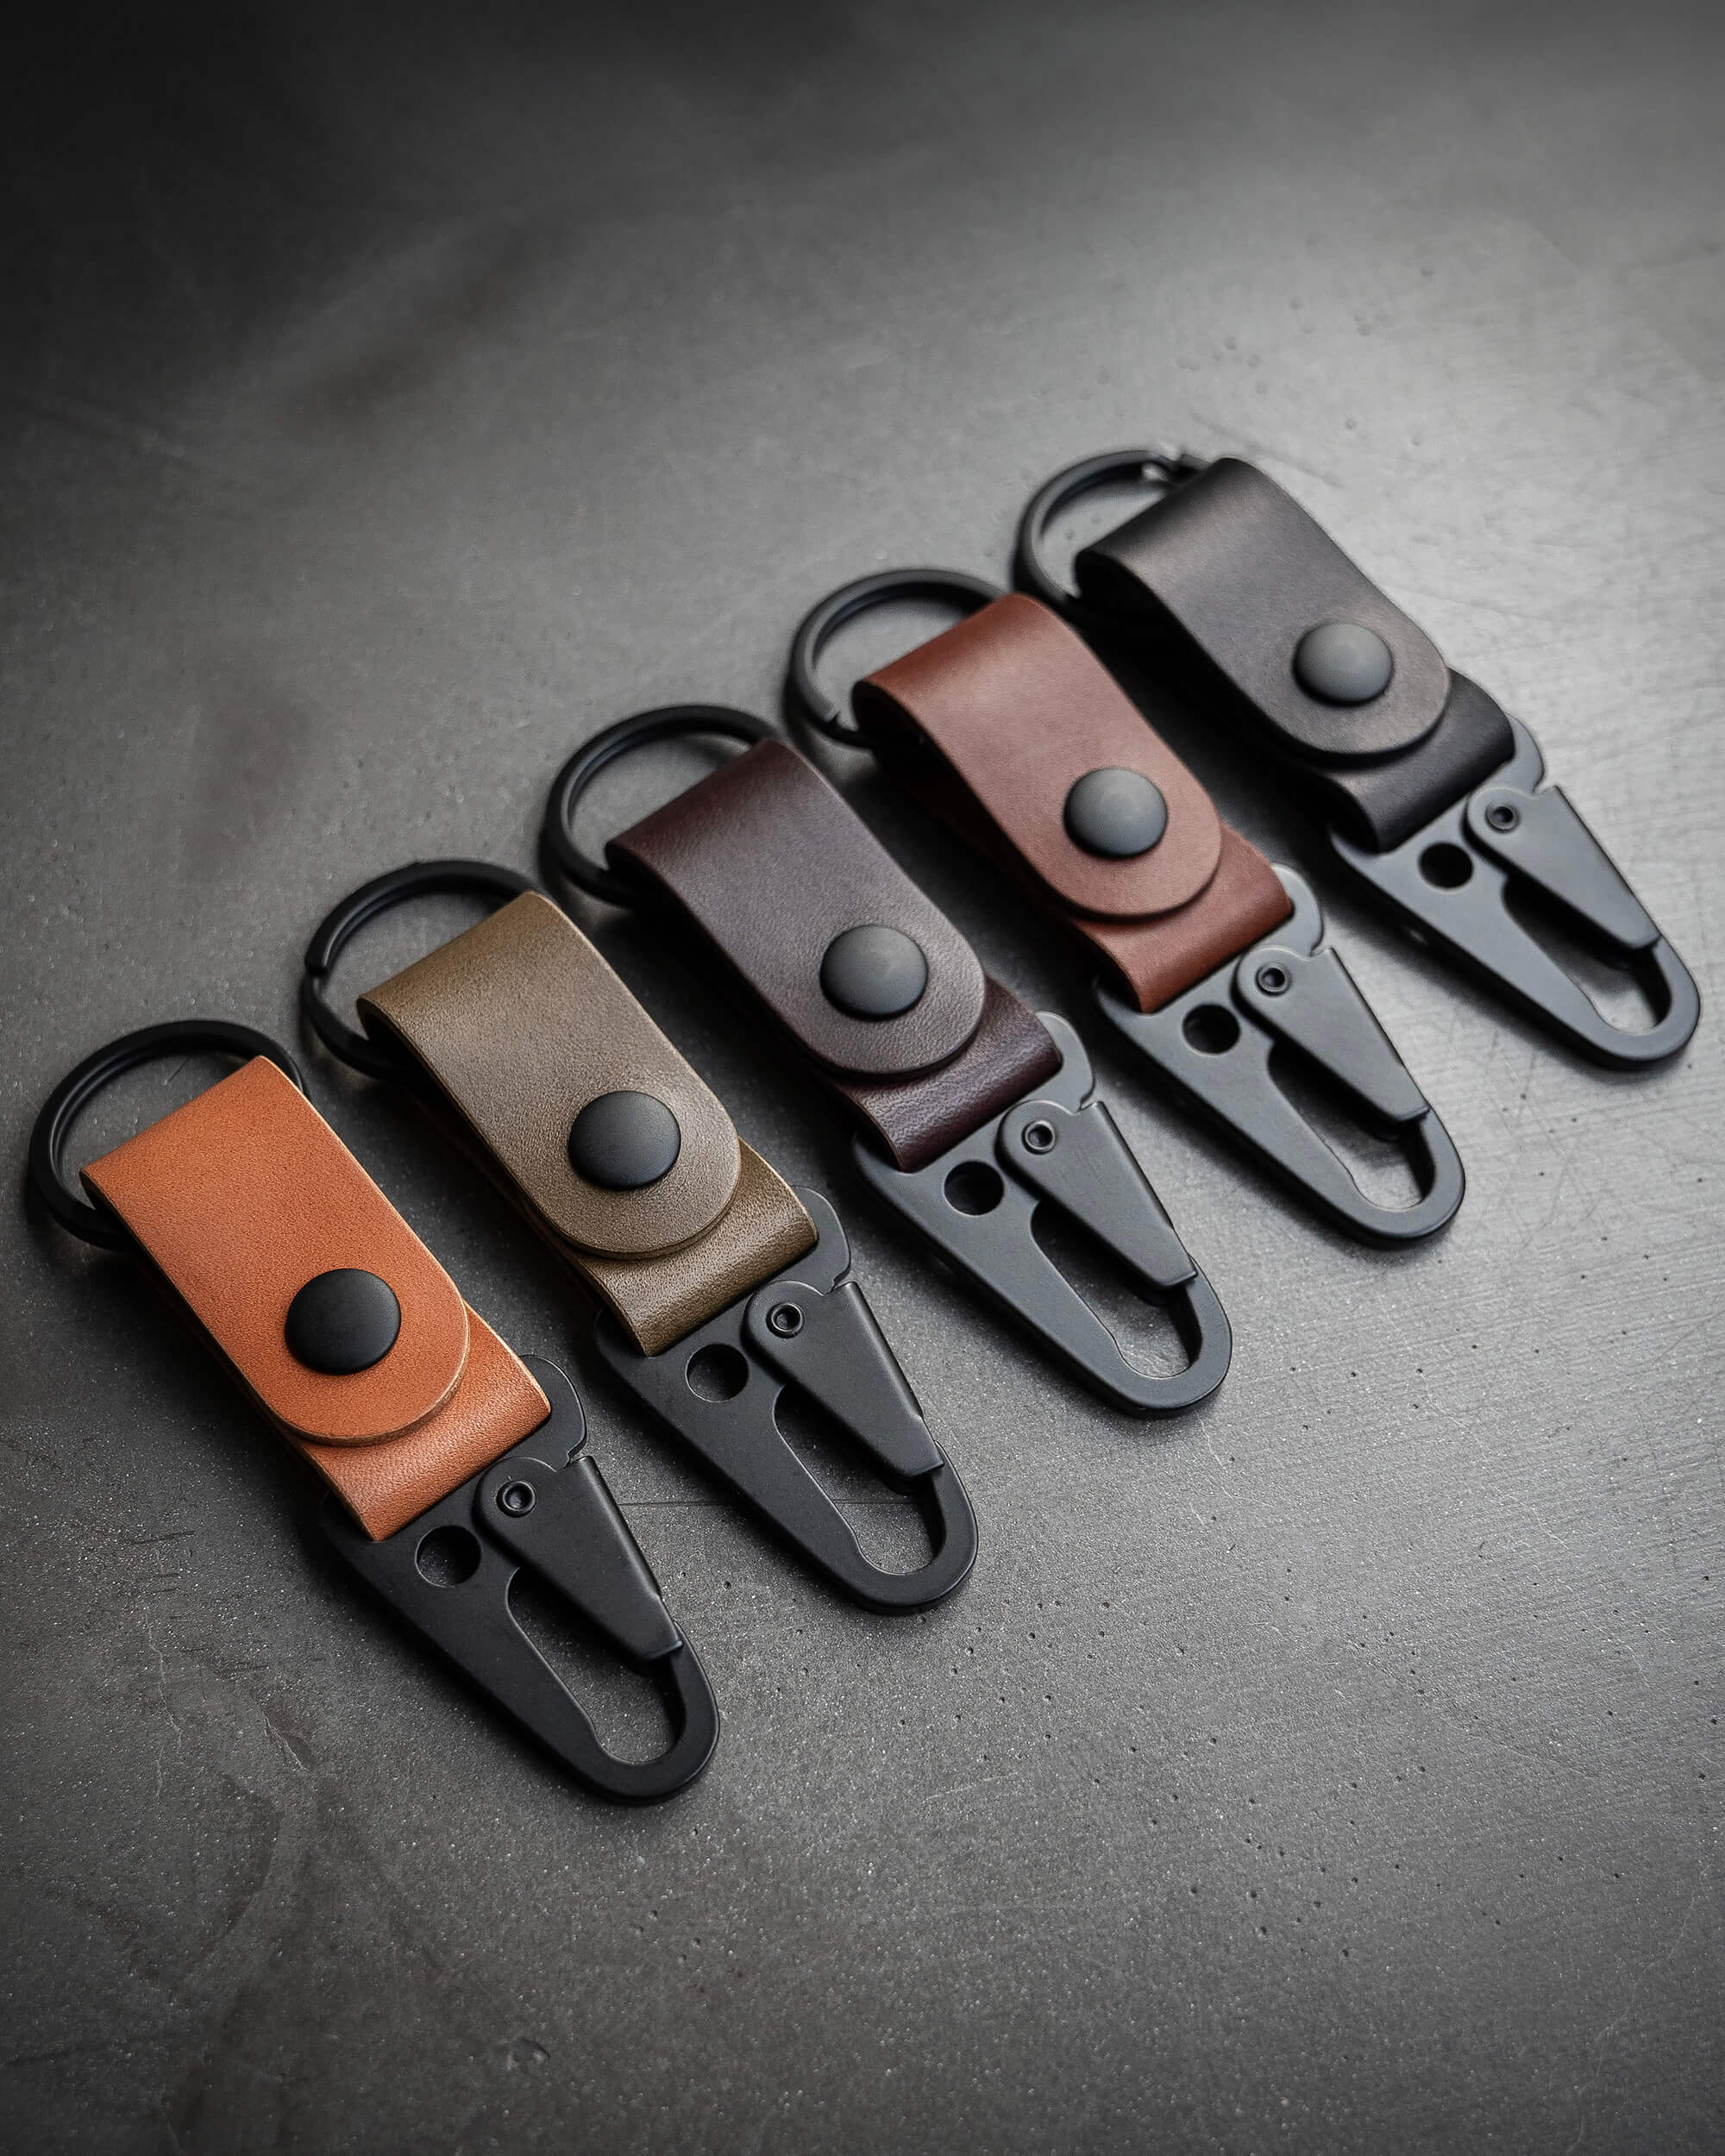 Custom Carabiner Leather Key Chain